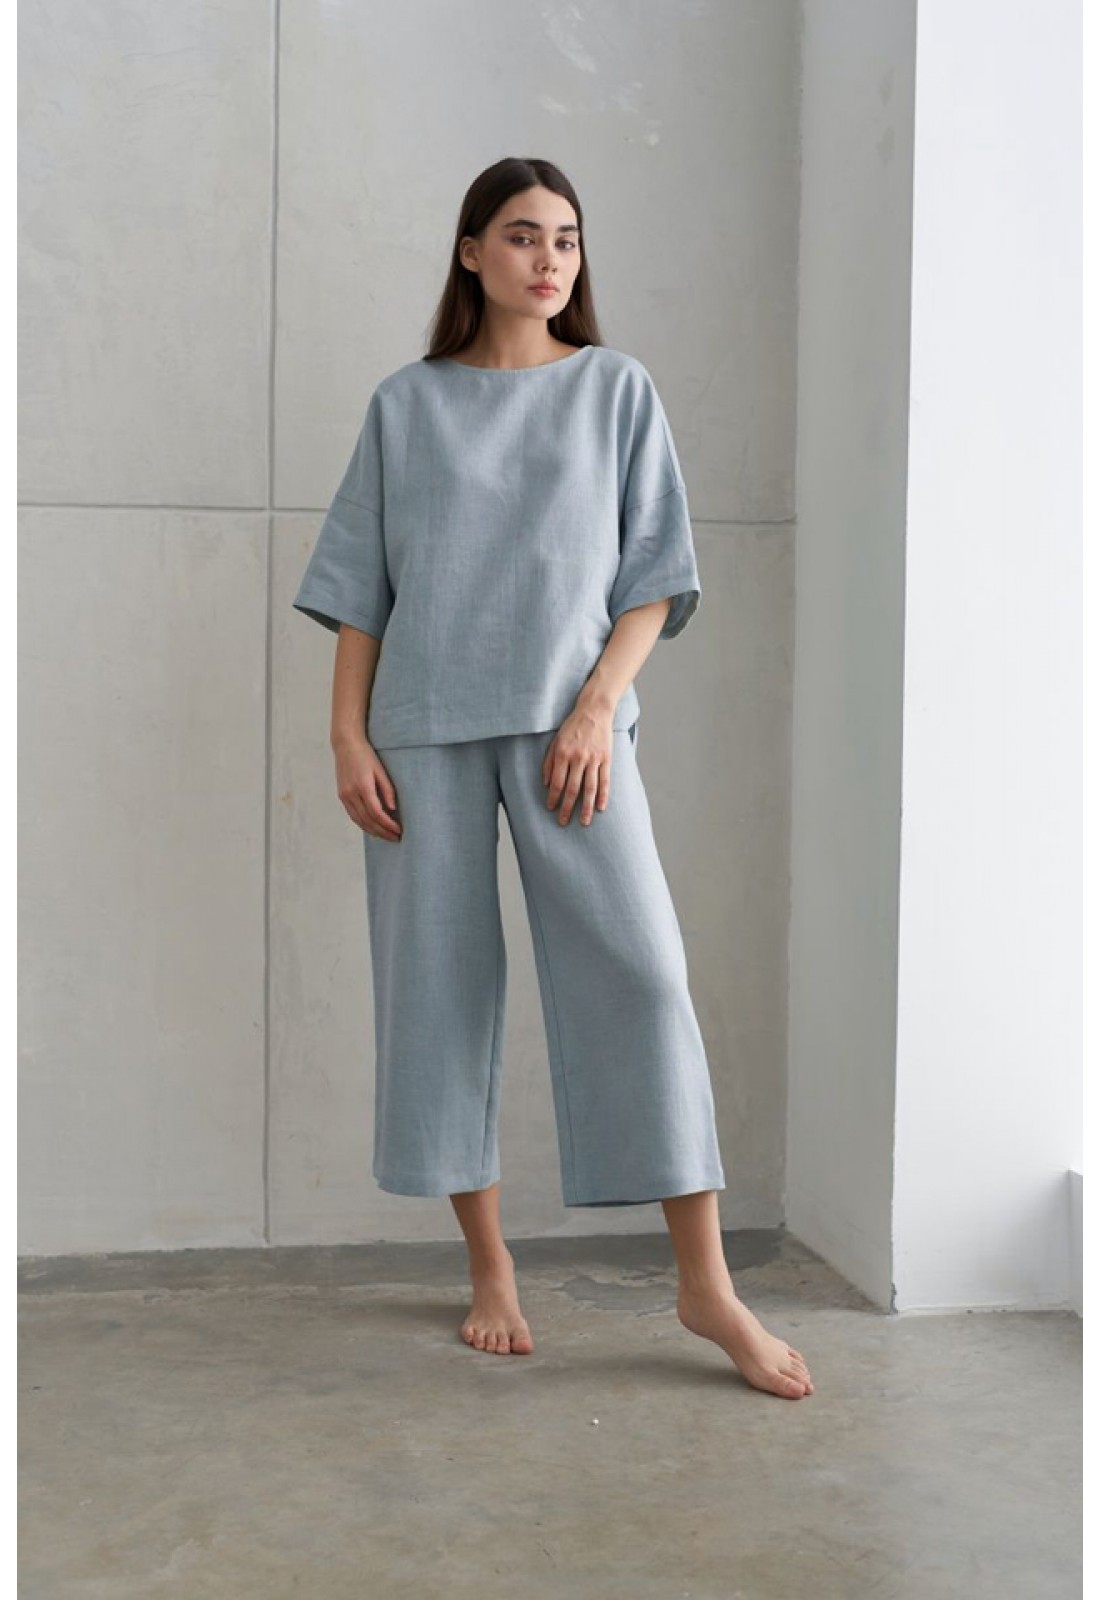 Shop Oversized Linen 2-Piece Set: Loose T-Shirt and Wide Leg Pants